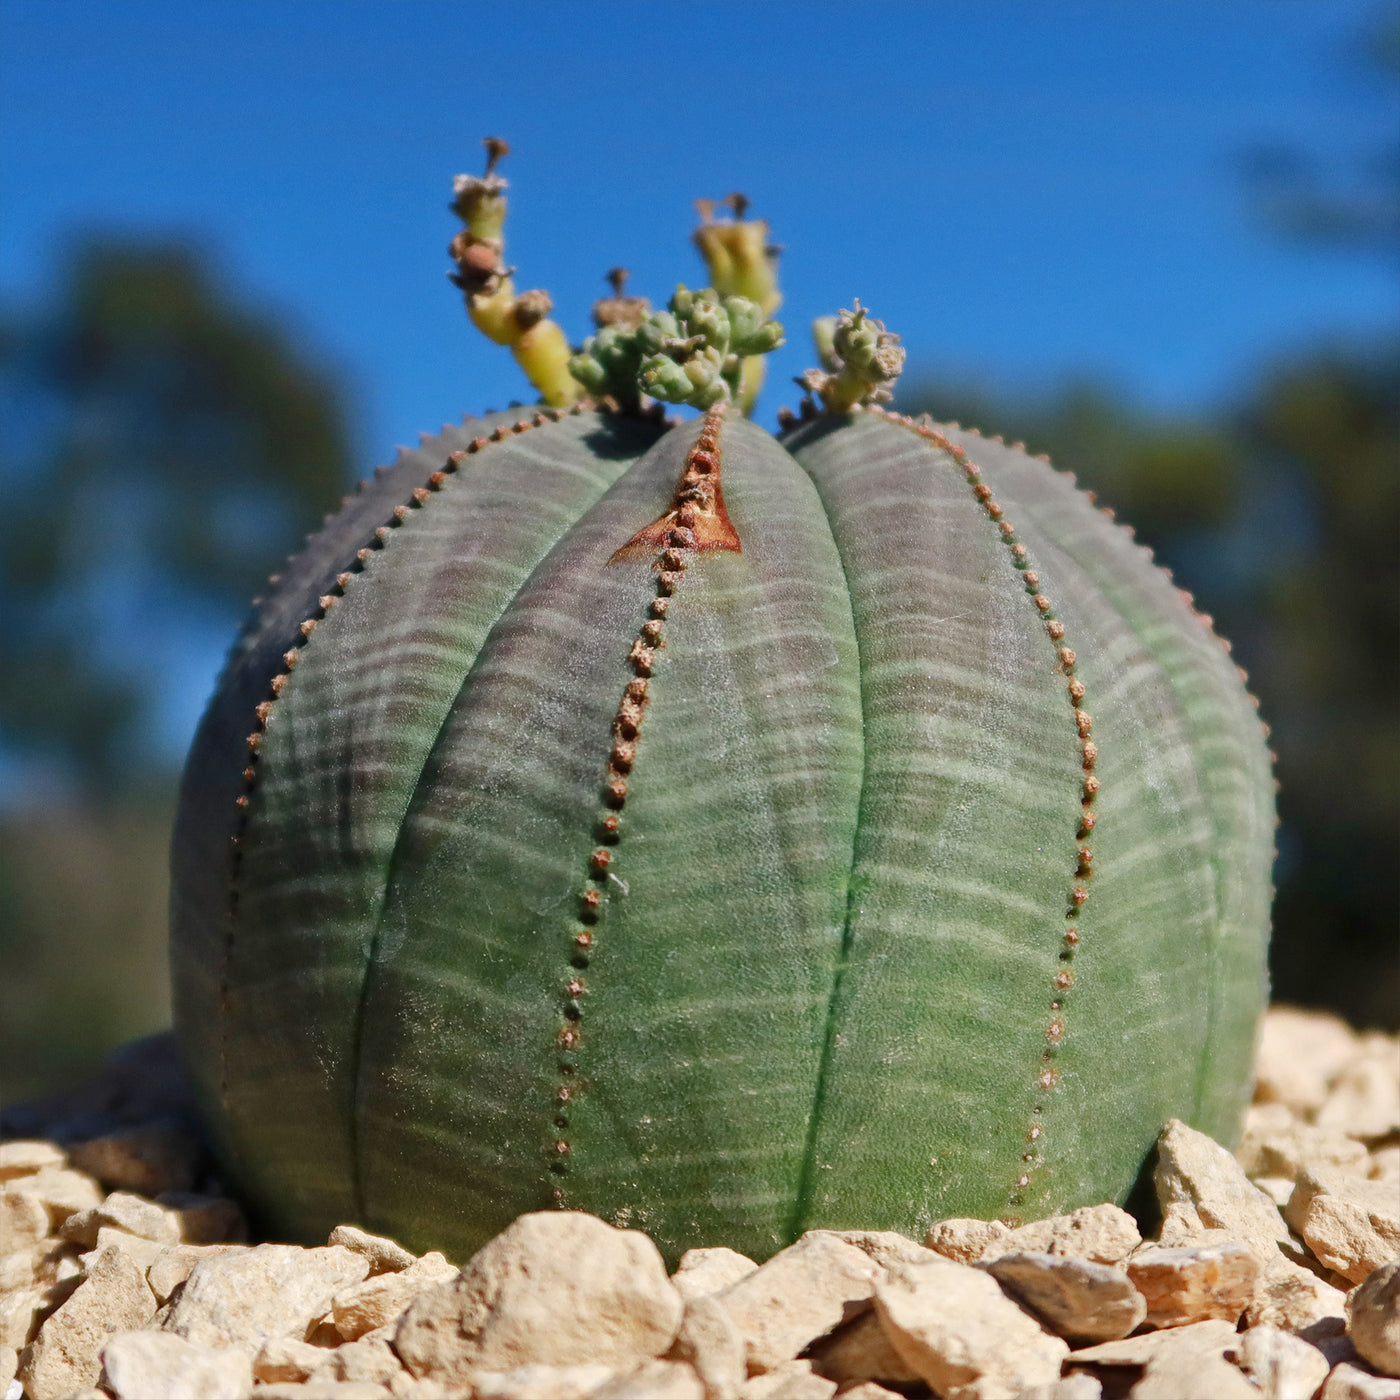 Baseball Plant 'Euphorbia obesa'